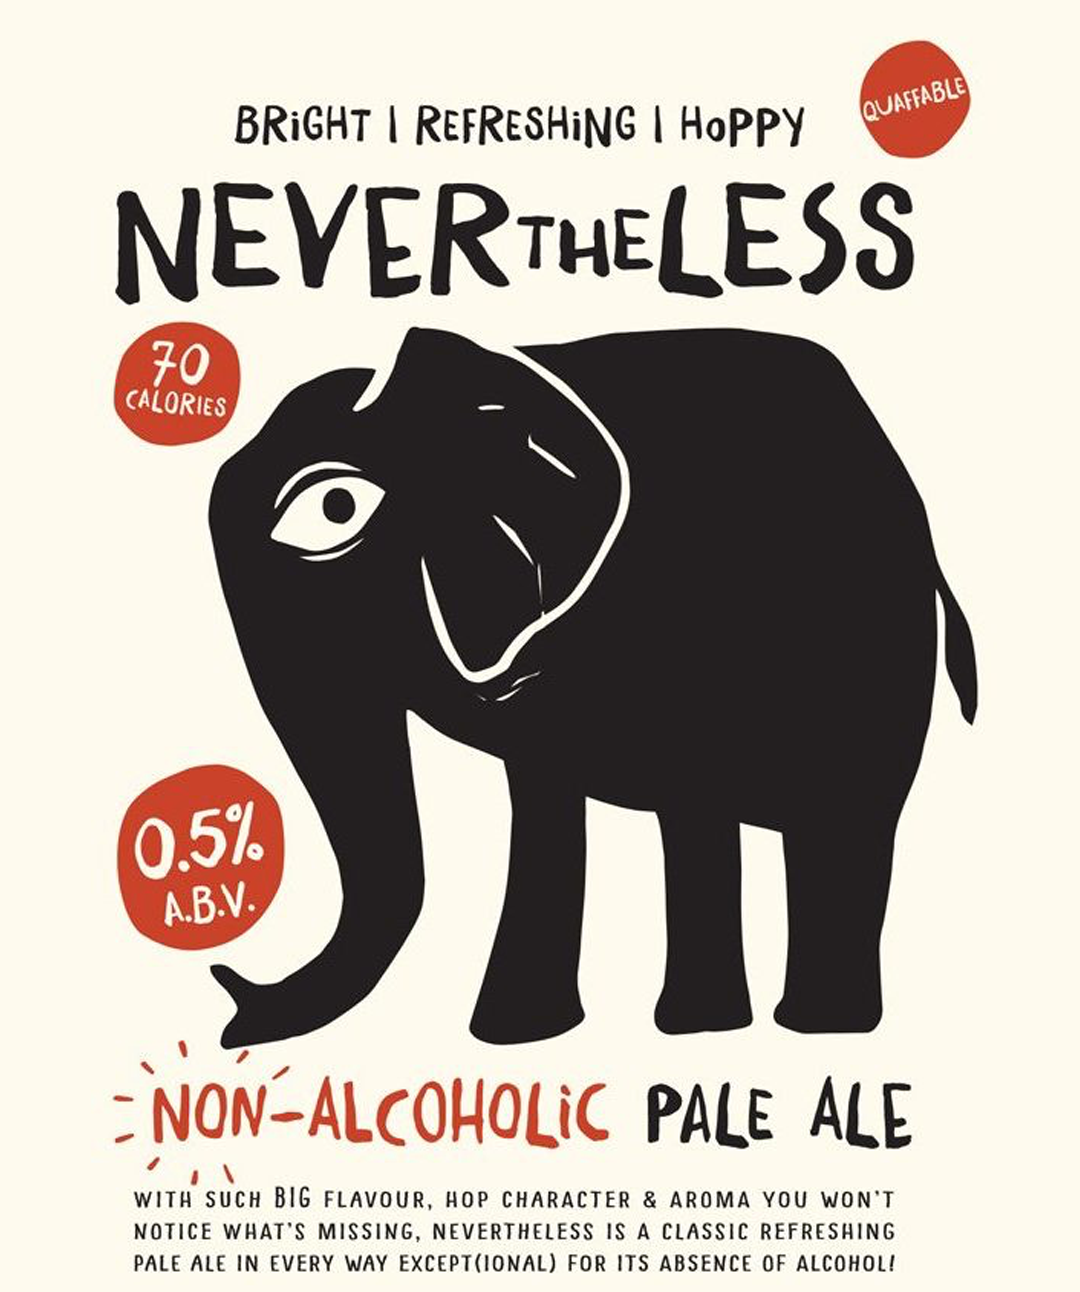 NEVERTHELESS | NON-ALCOHOLIC PALE ALE